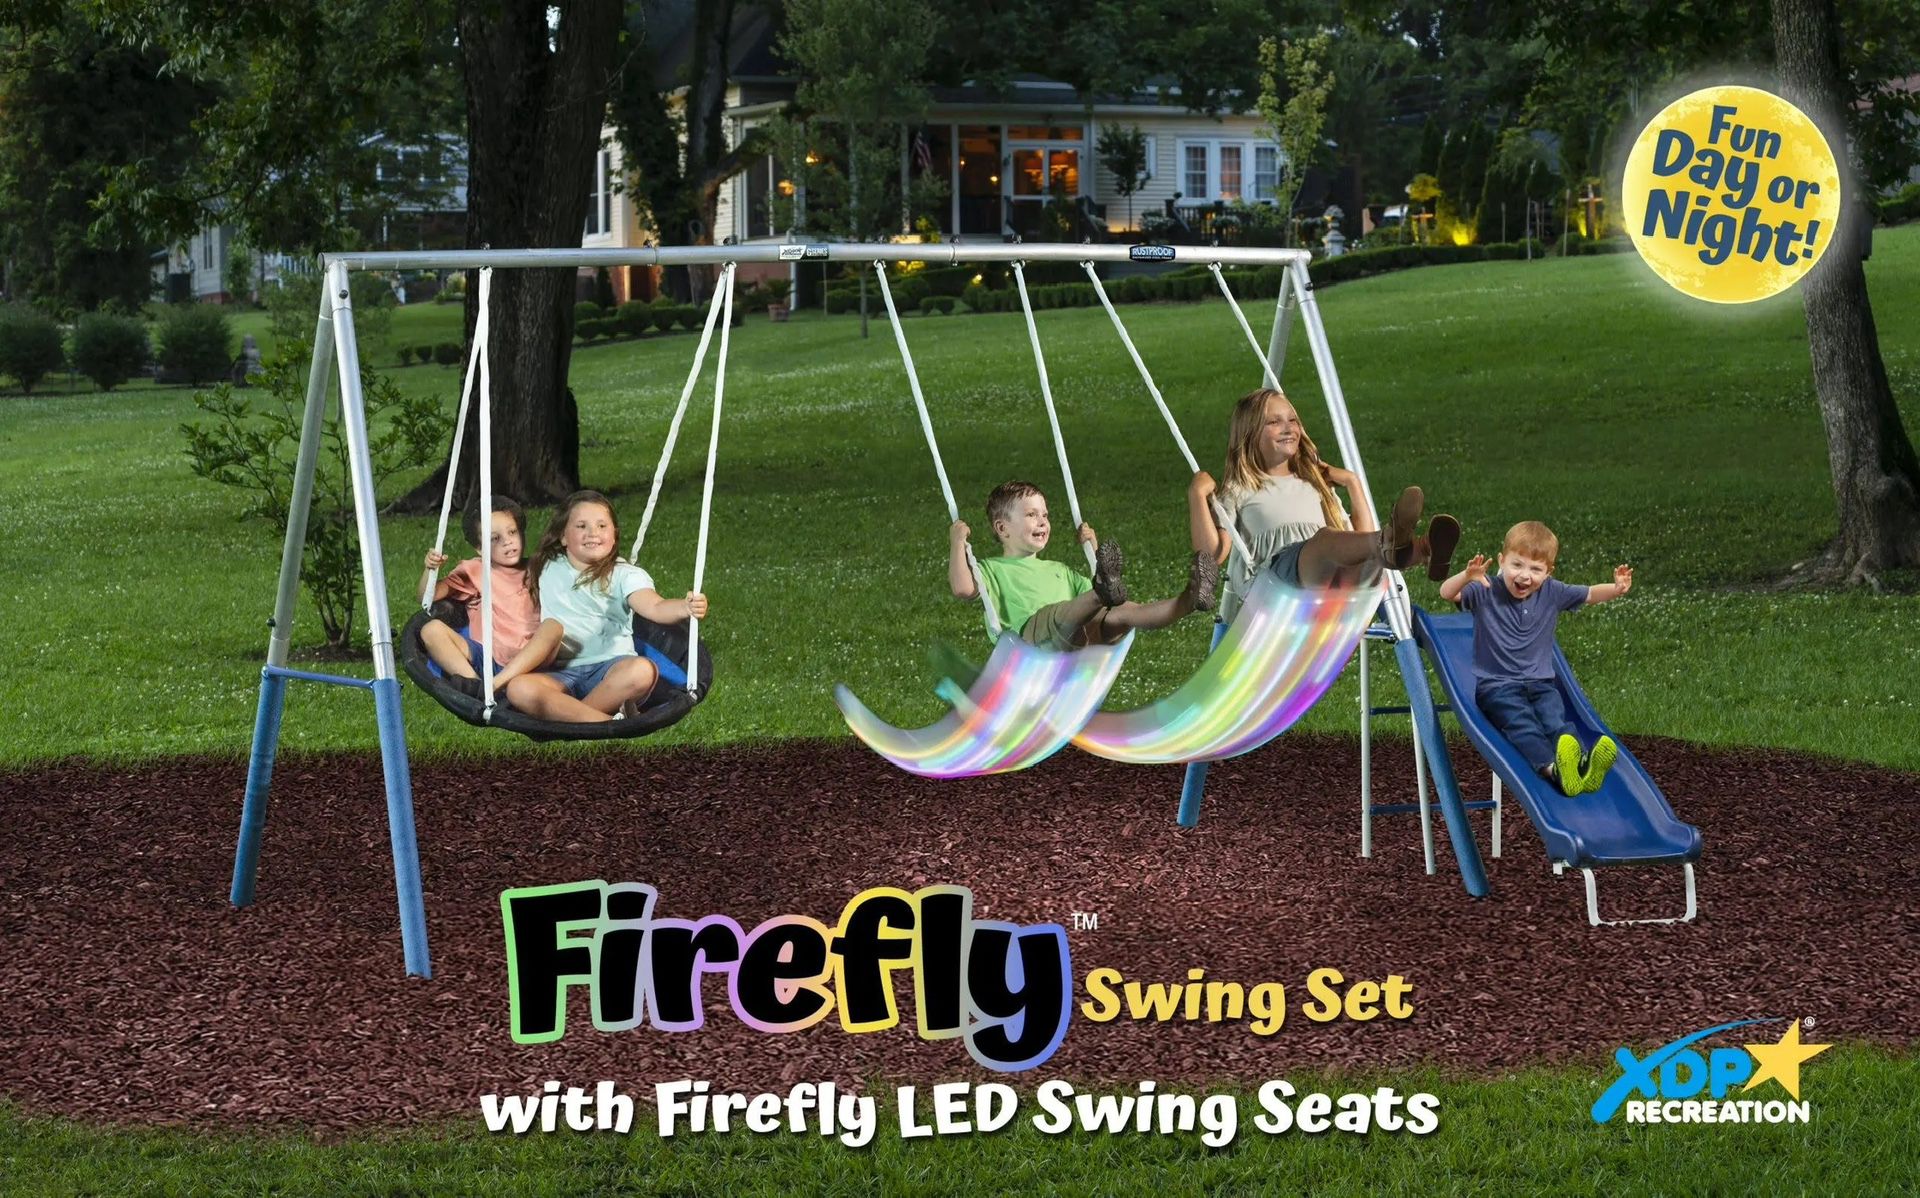 Swing set Firefly Brand